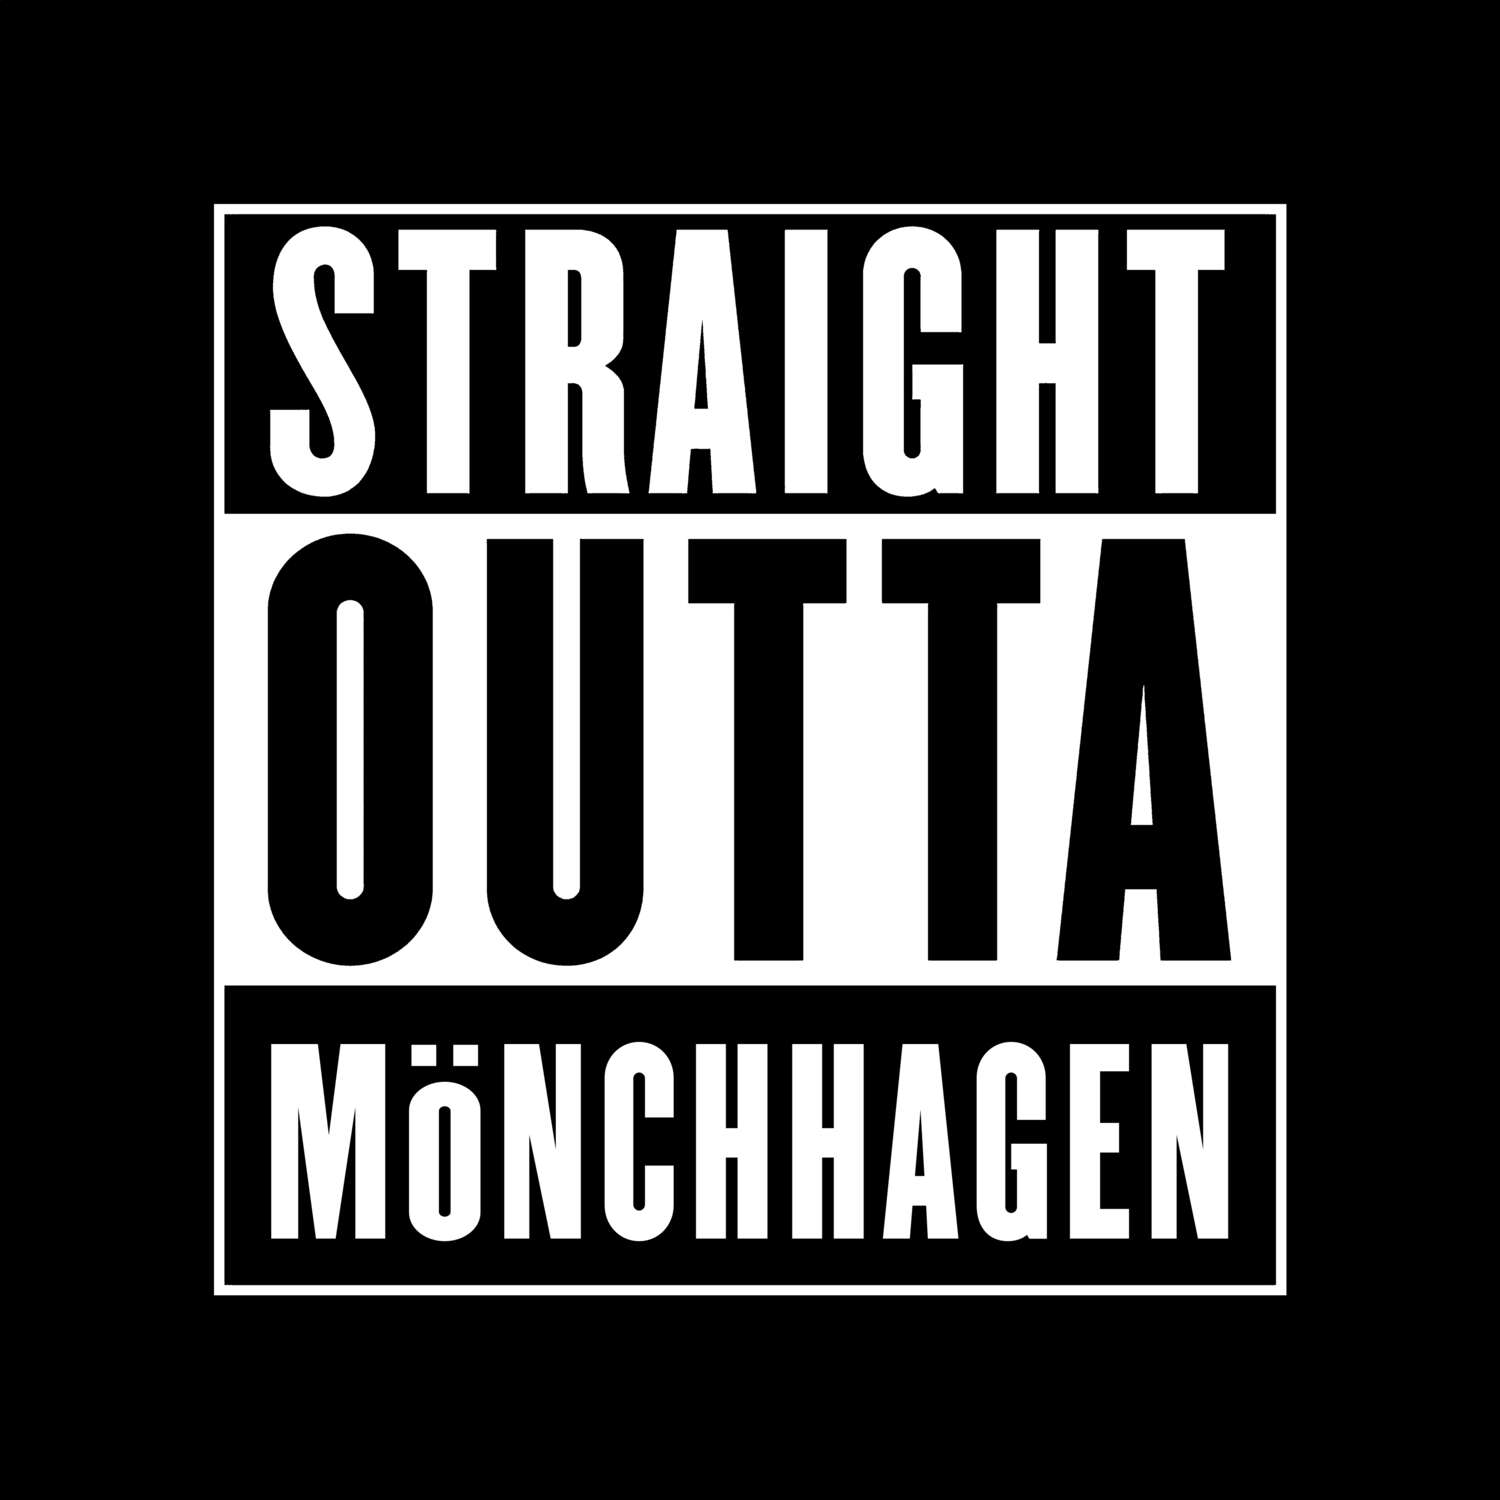 Mönchhagen T-Shirt »Straight Outta«